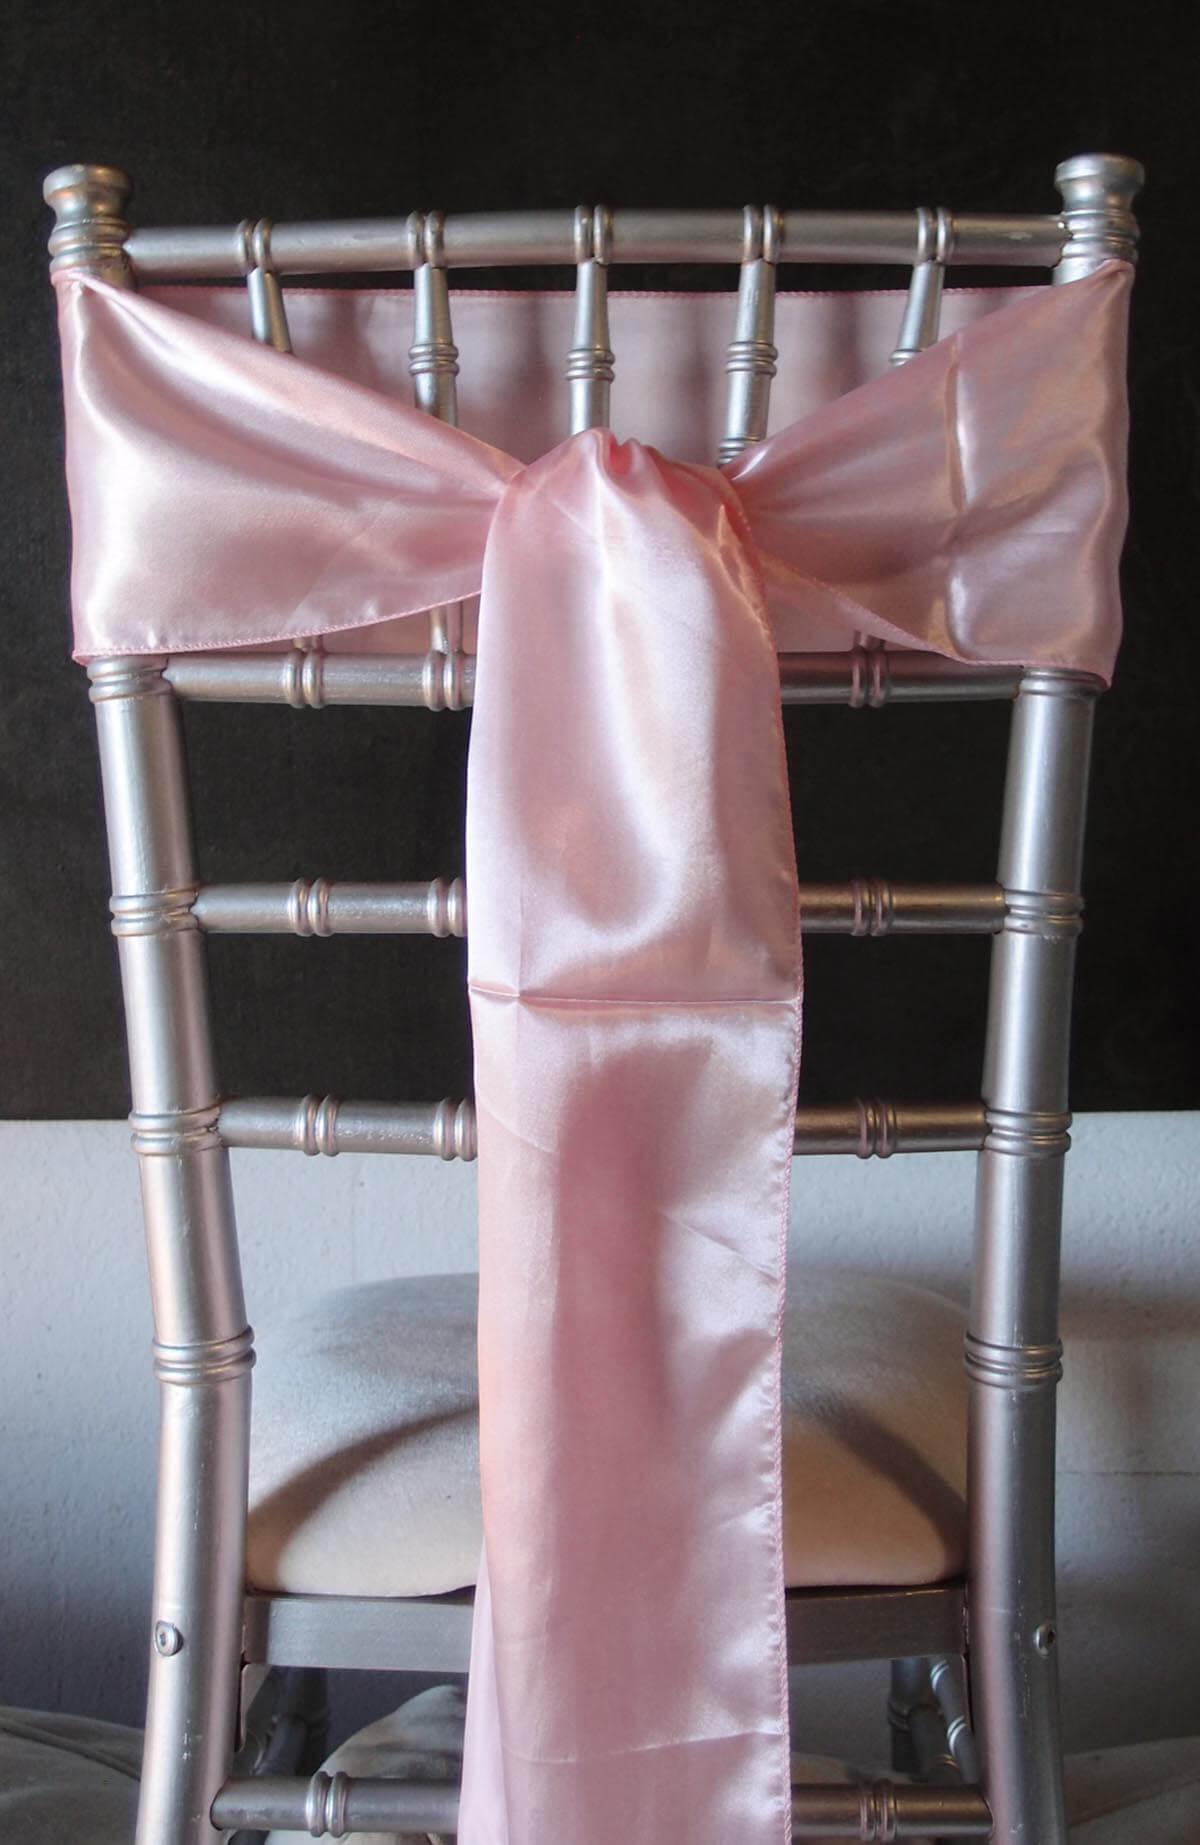 Pink Satin Chair Sash 6x106 Set of 10 - Save-On-Crafts